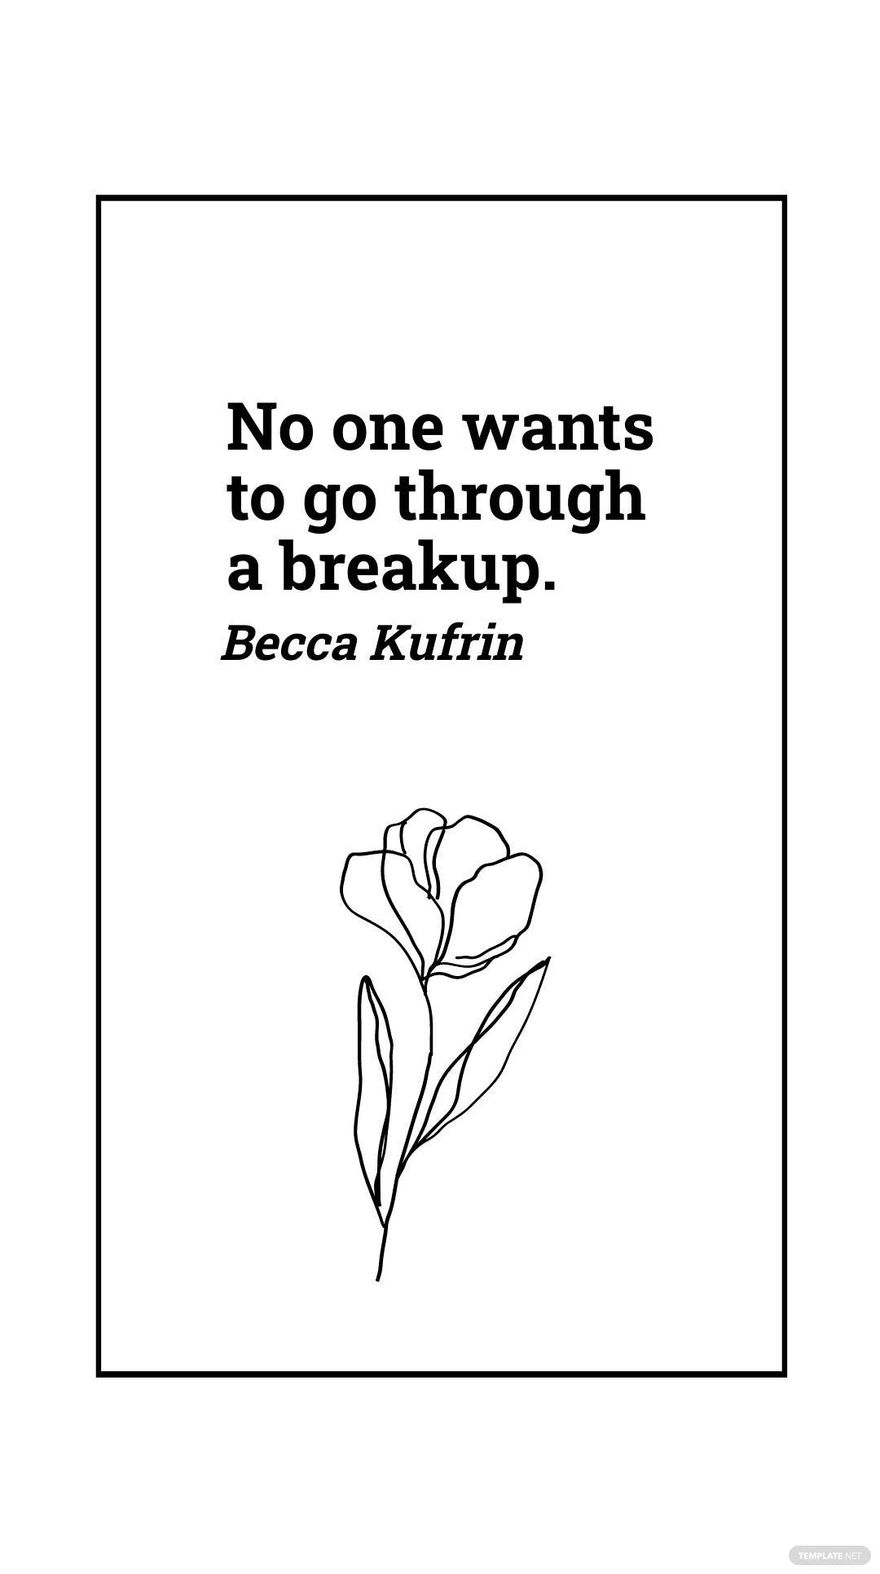 Becca Kufrin - No one wants to go through a breakup. in JPG